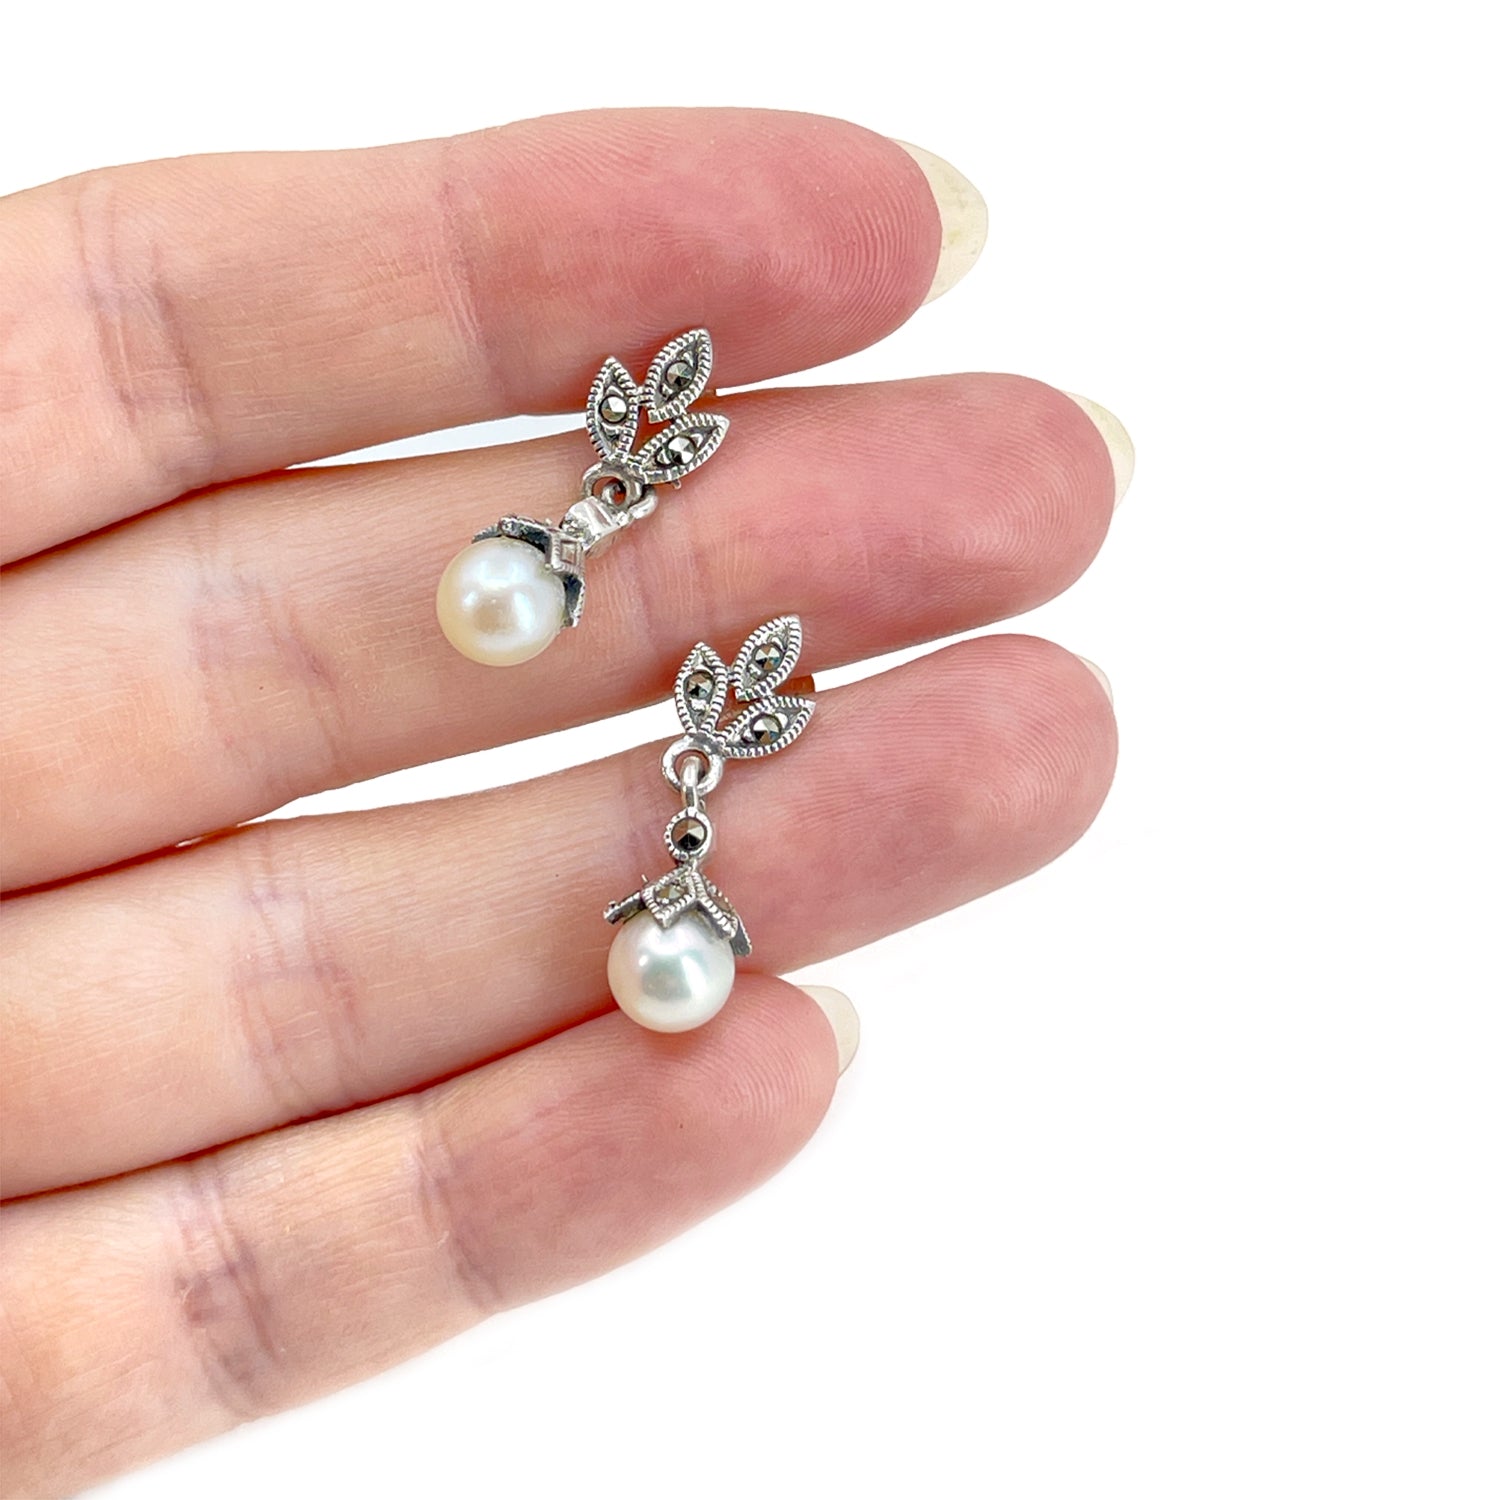 Floral Nouveau Marcasite Vintage Akoya Saltwater Cultured Pearl Pierced Drop Earrings- Sterling Silver